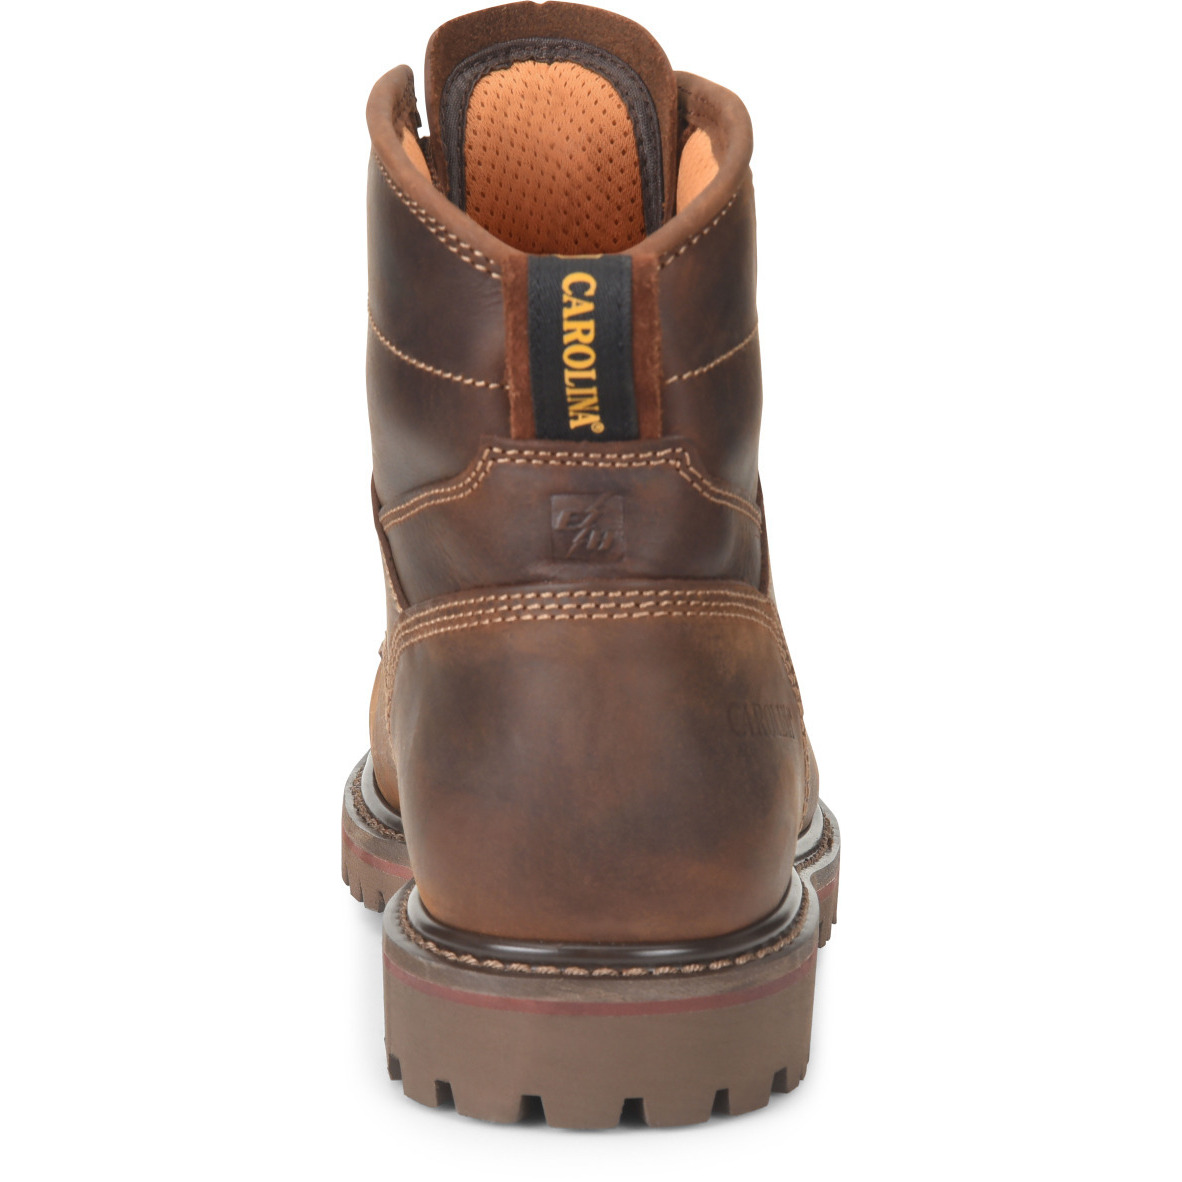 CAROLINA Men's 28 Series 6 Composite Toe Waterproof Work Boots Medium Brown - CA7528 BROWN - BROWN, 10-D